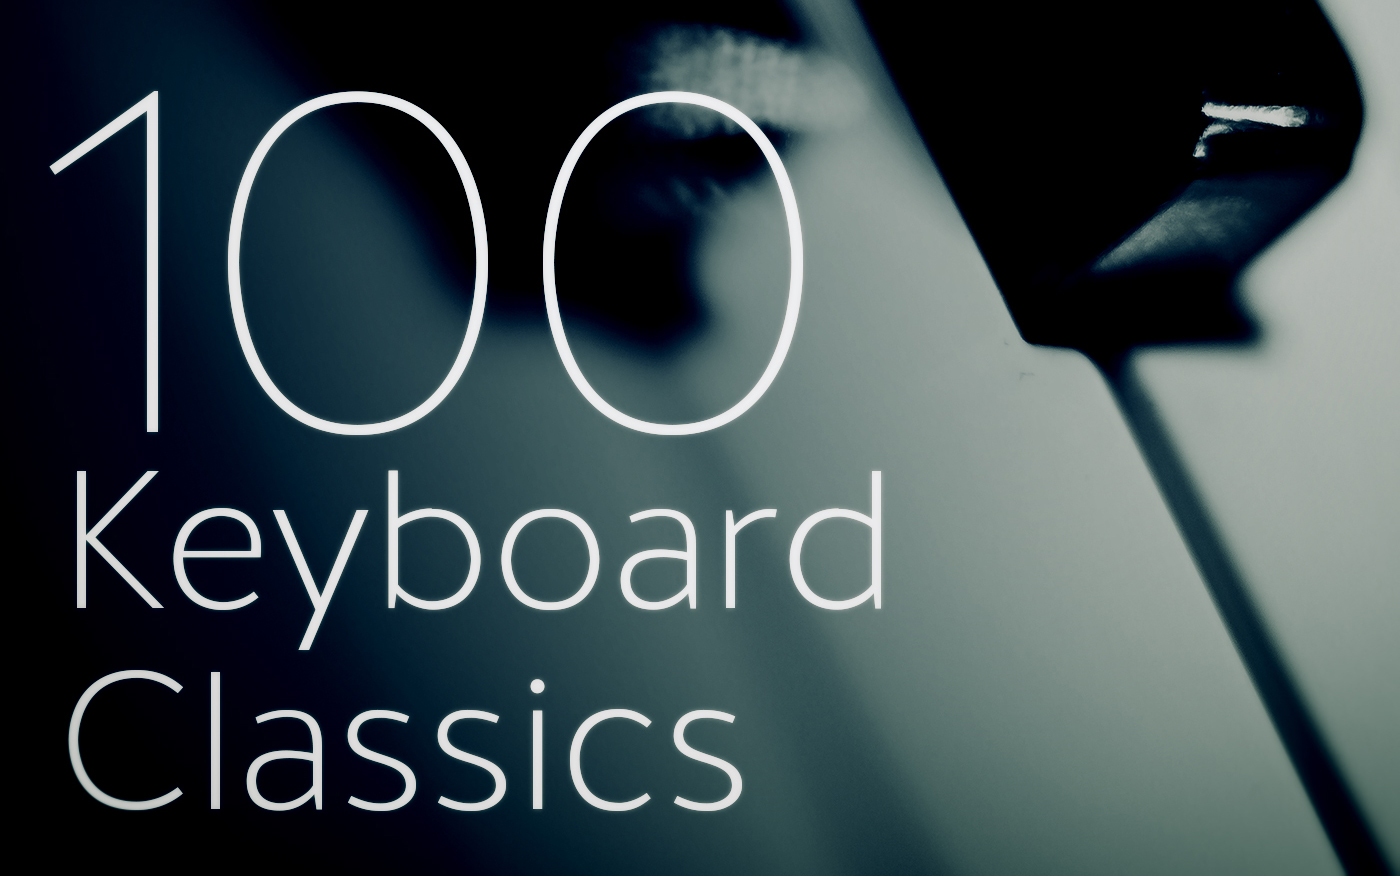 100 Keyboard Classics